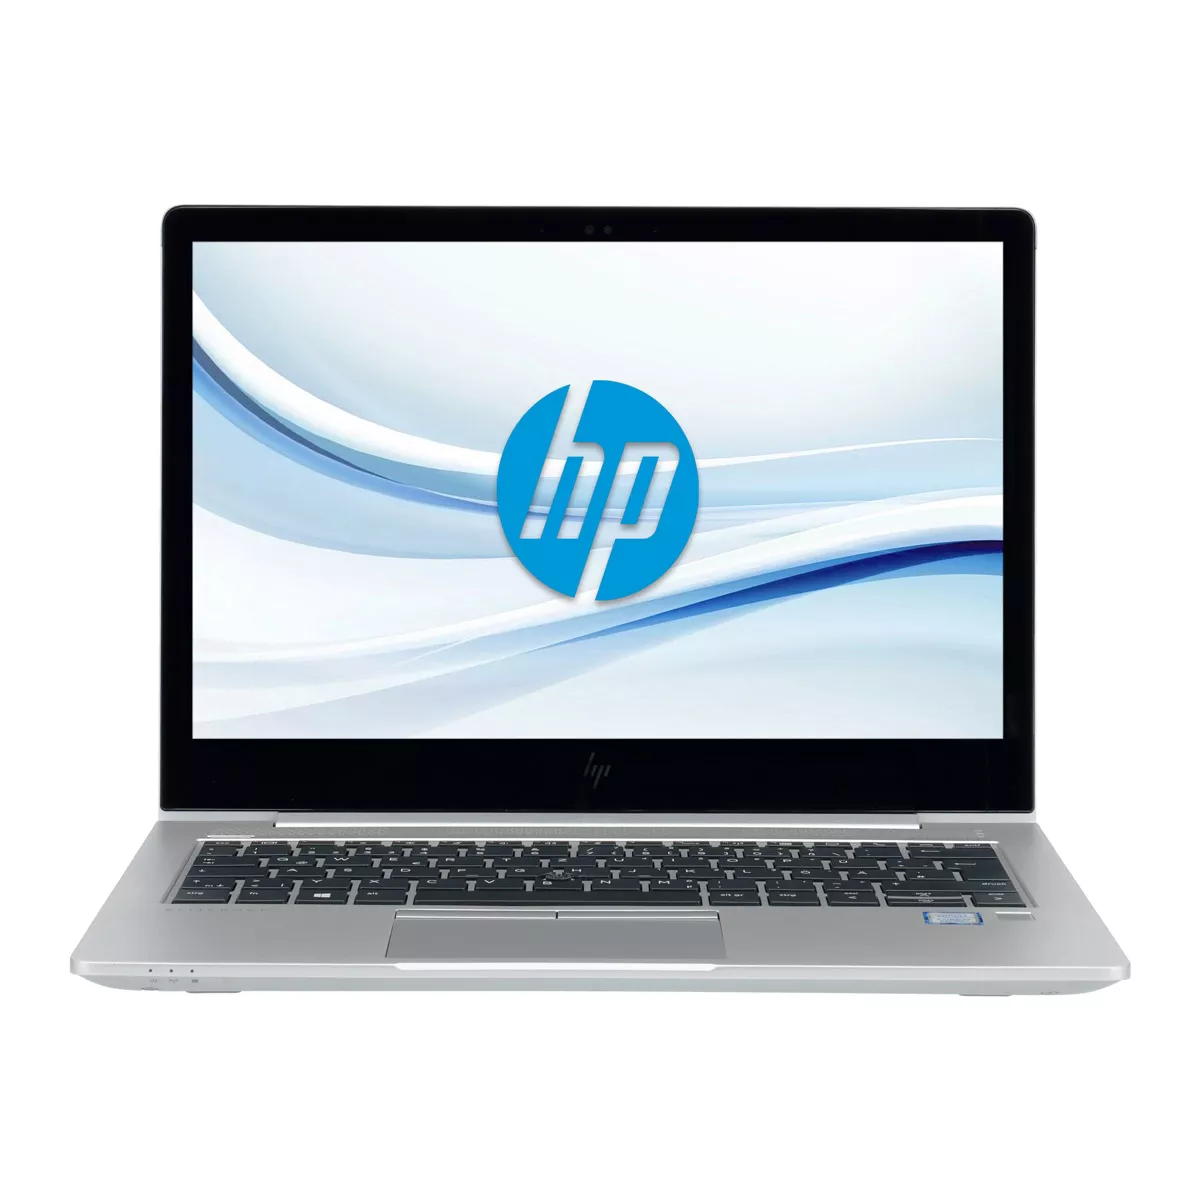 HP EliteBook 830 G5 Core i7 8550U 32 GB 500 GB M.2 nVME SSD Touch Webcam B